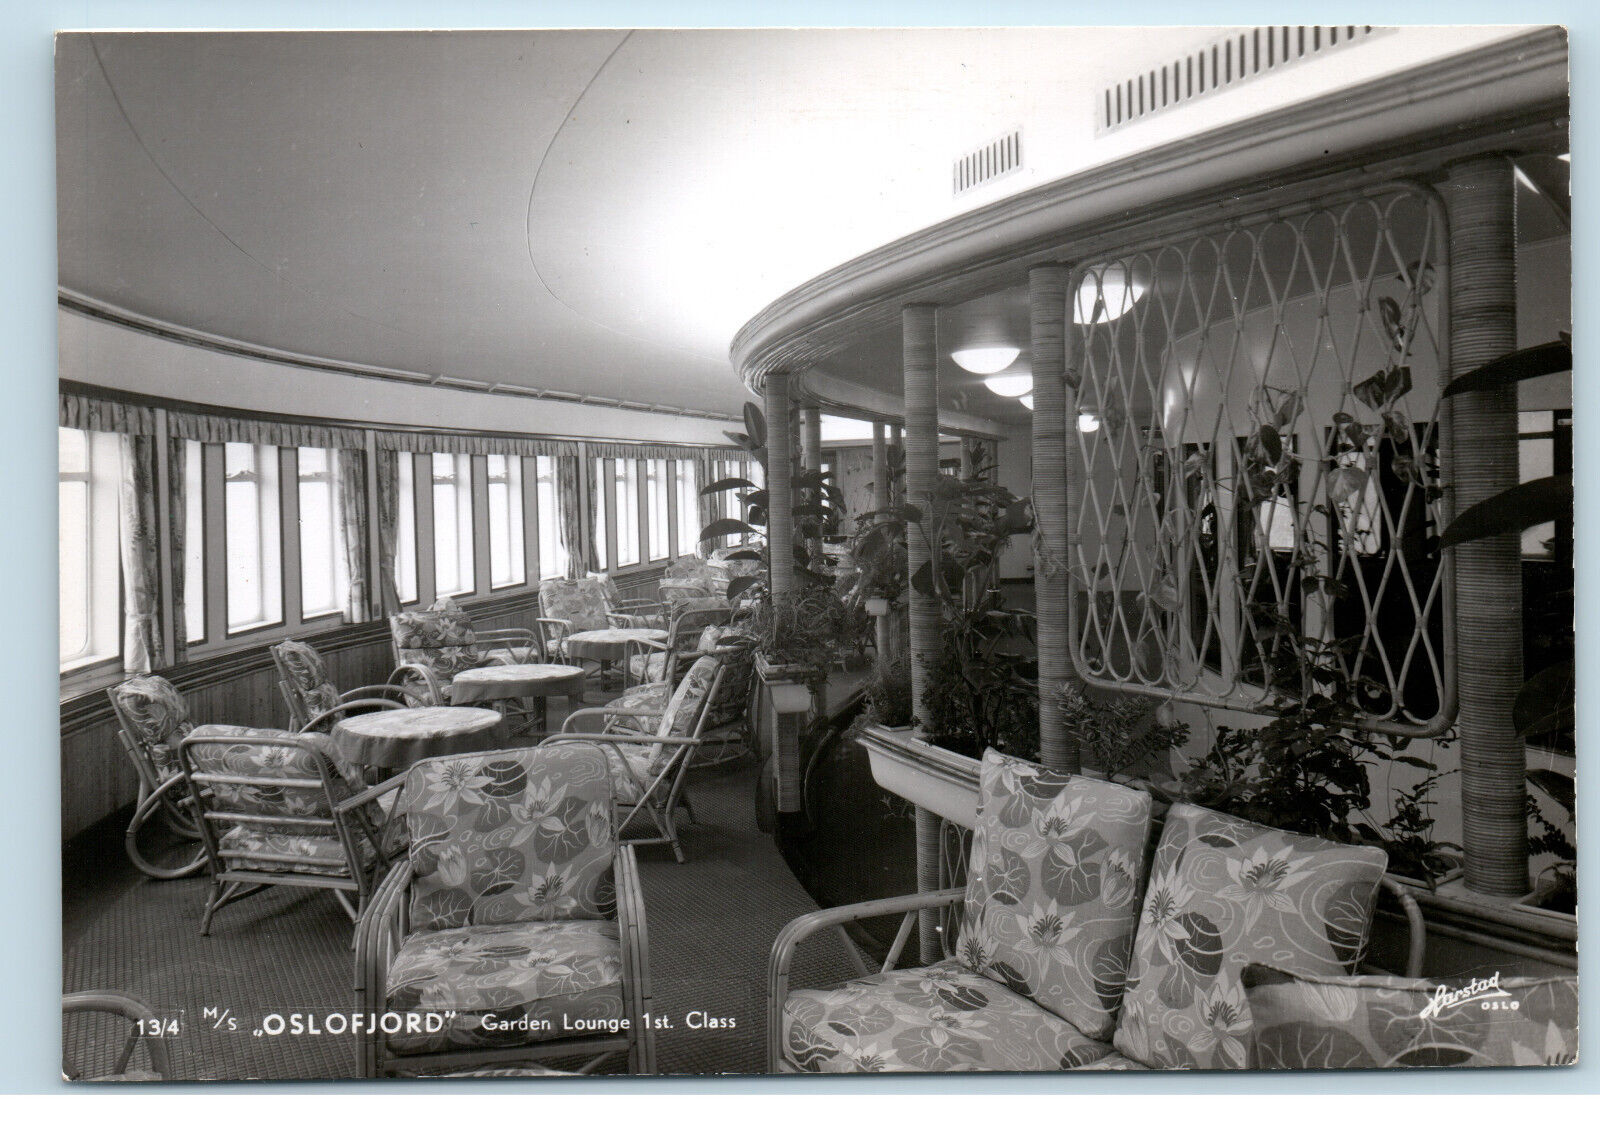 MS Oslofjord Norwegian American Line RPPC 4x6 Vintage Real Photo Postcard F27